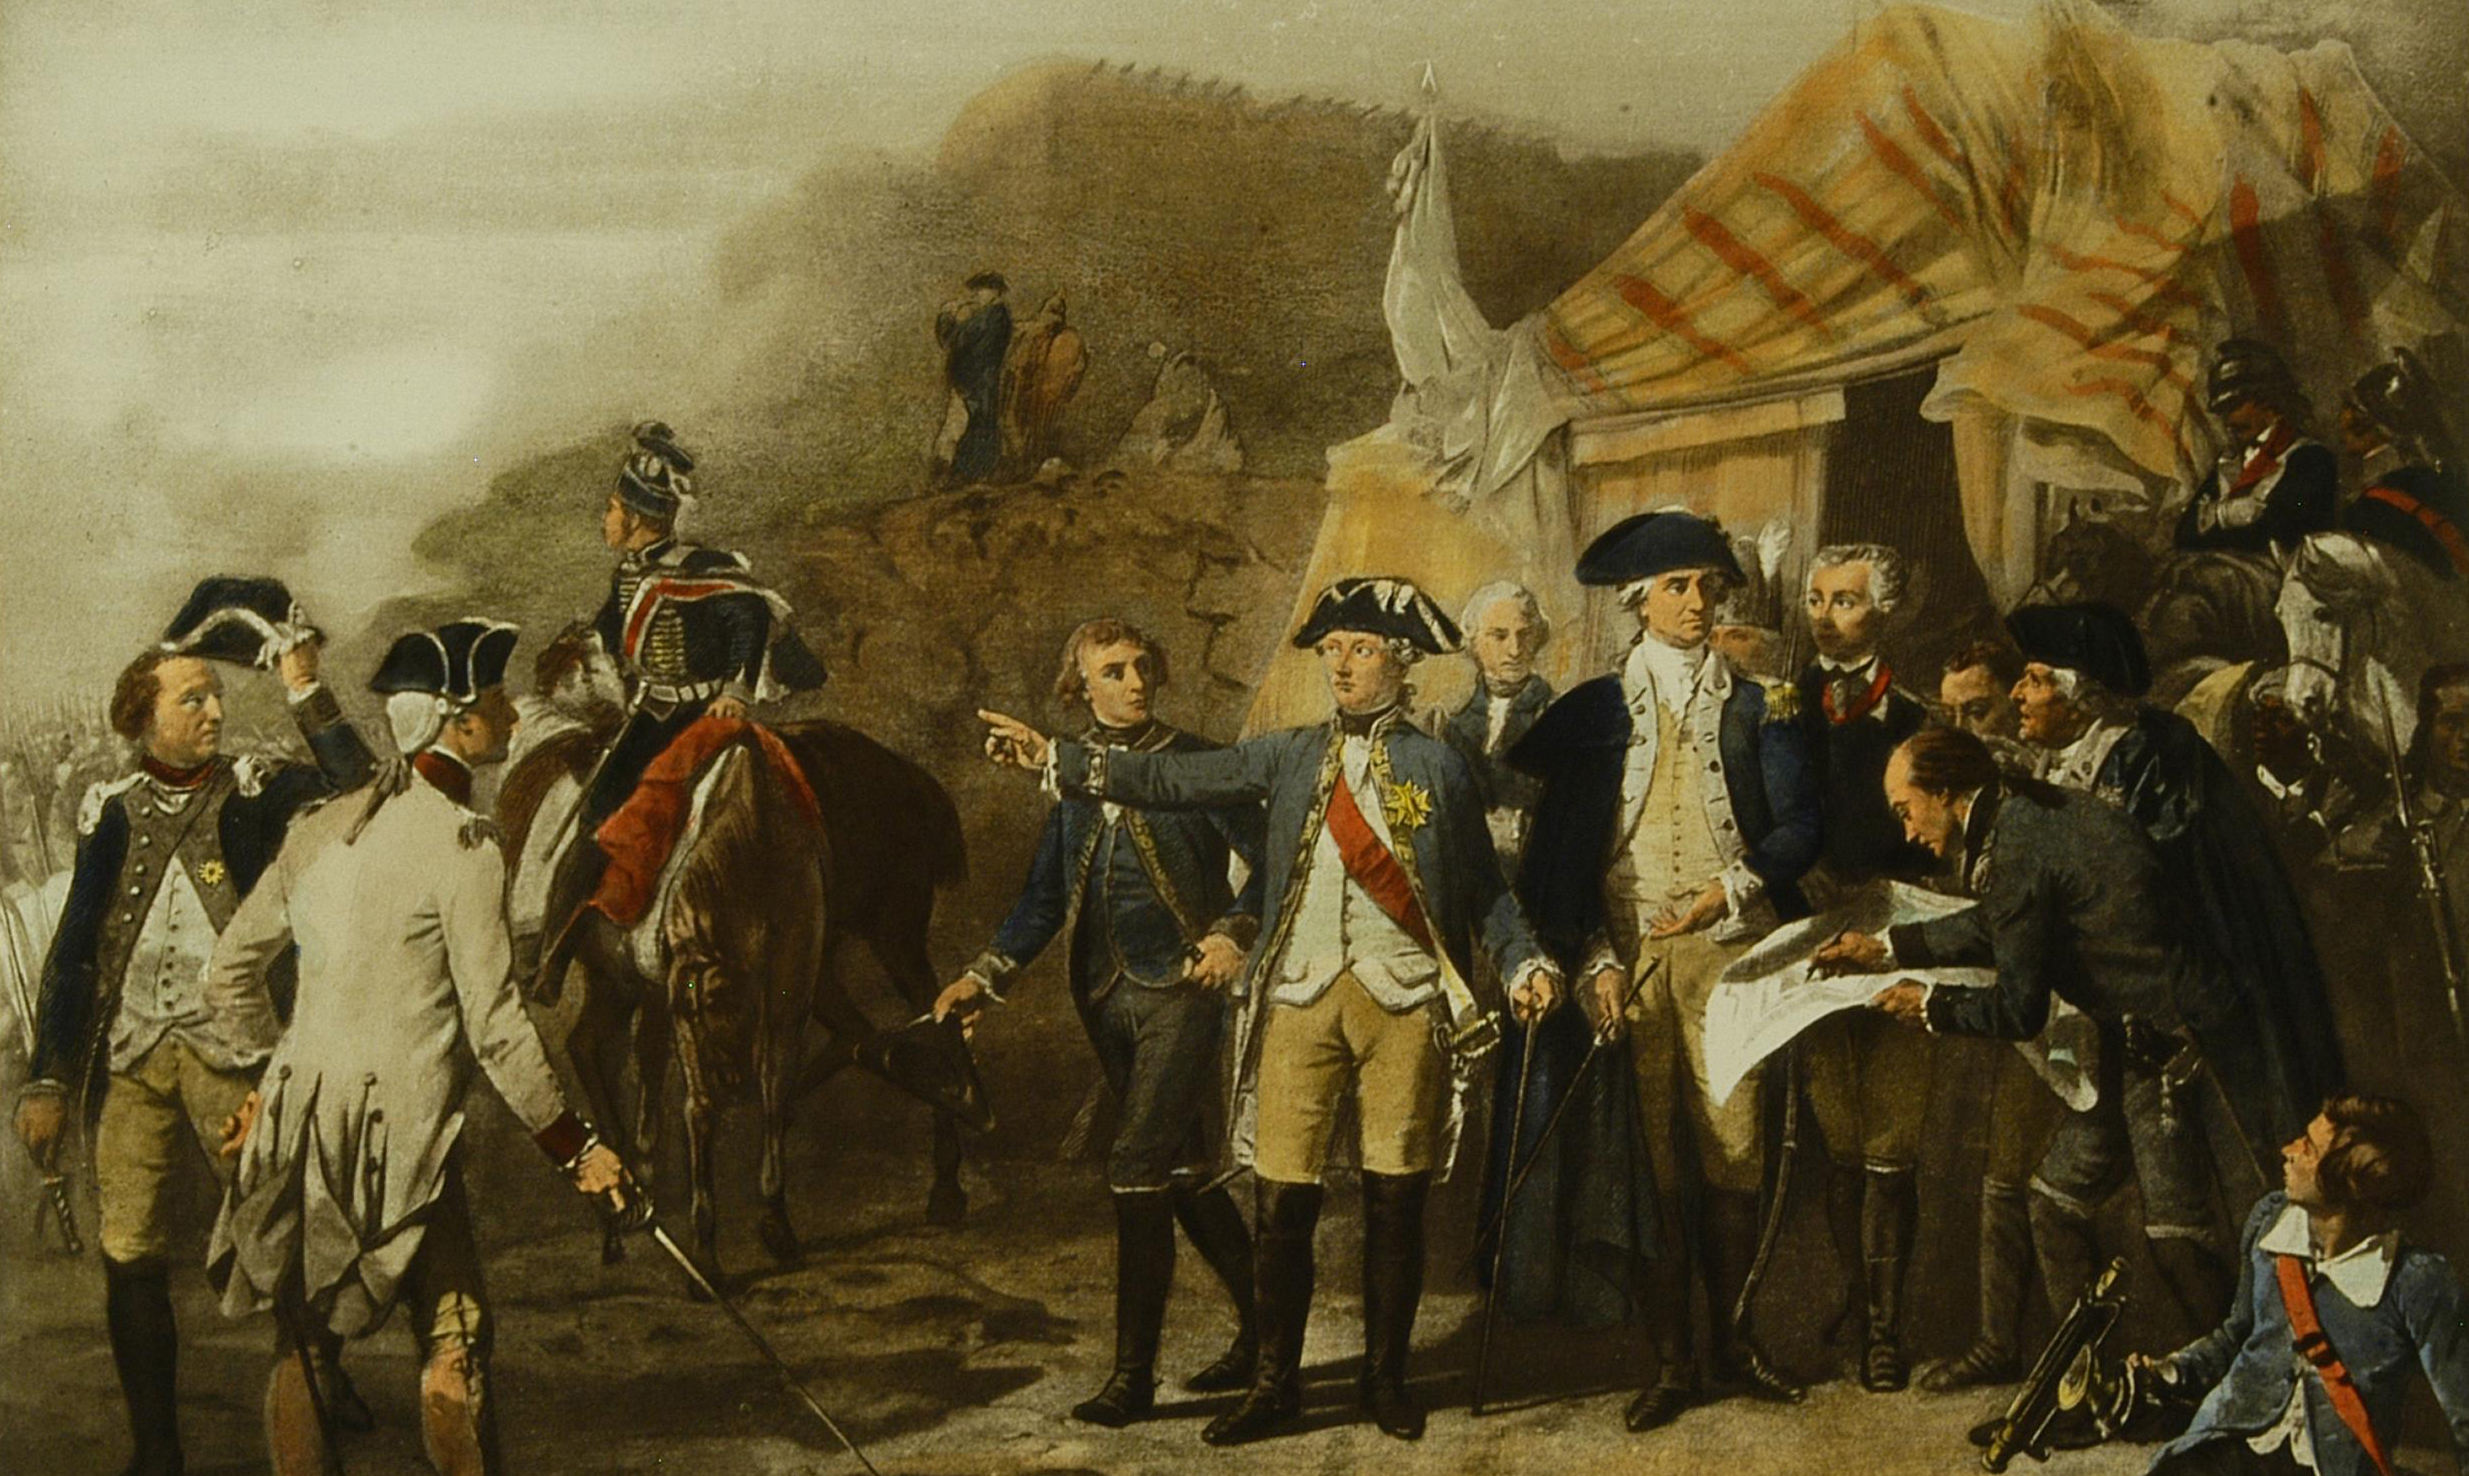 История америки. Джордж Вашингтон война за независимость. Джордж Вашингтон 1775. Джордж Вашингтон революция. Война за независимость США 1775-1783.